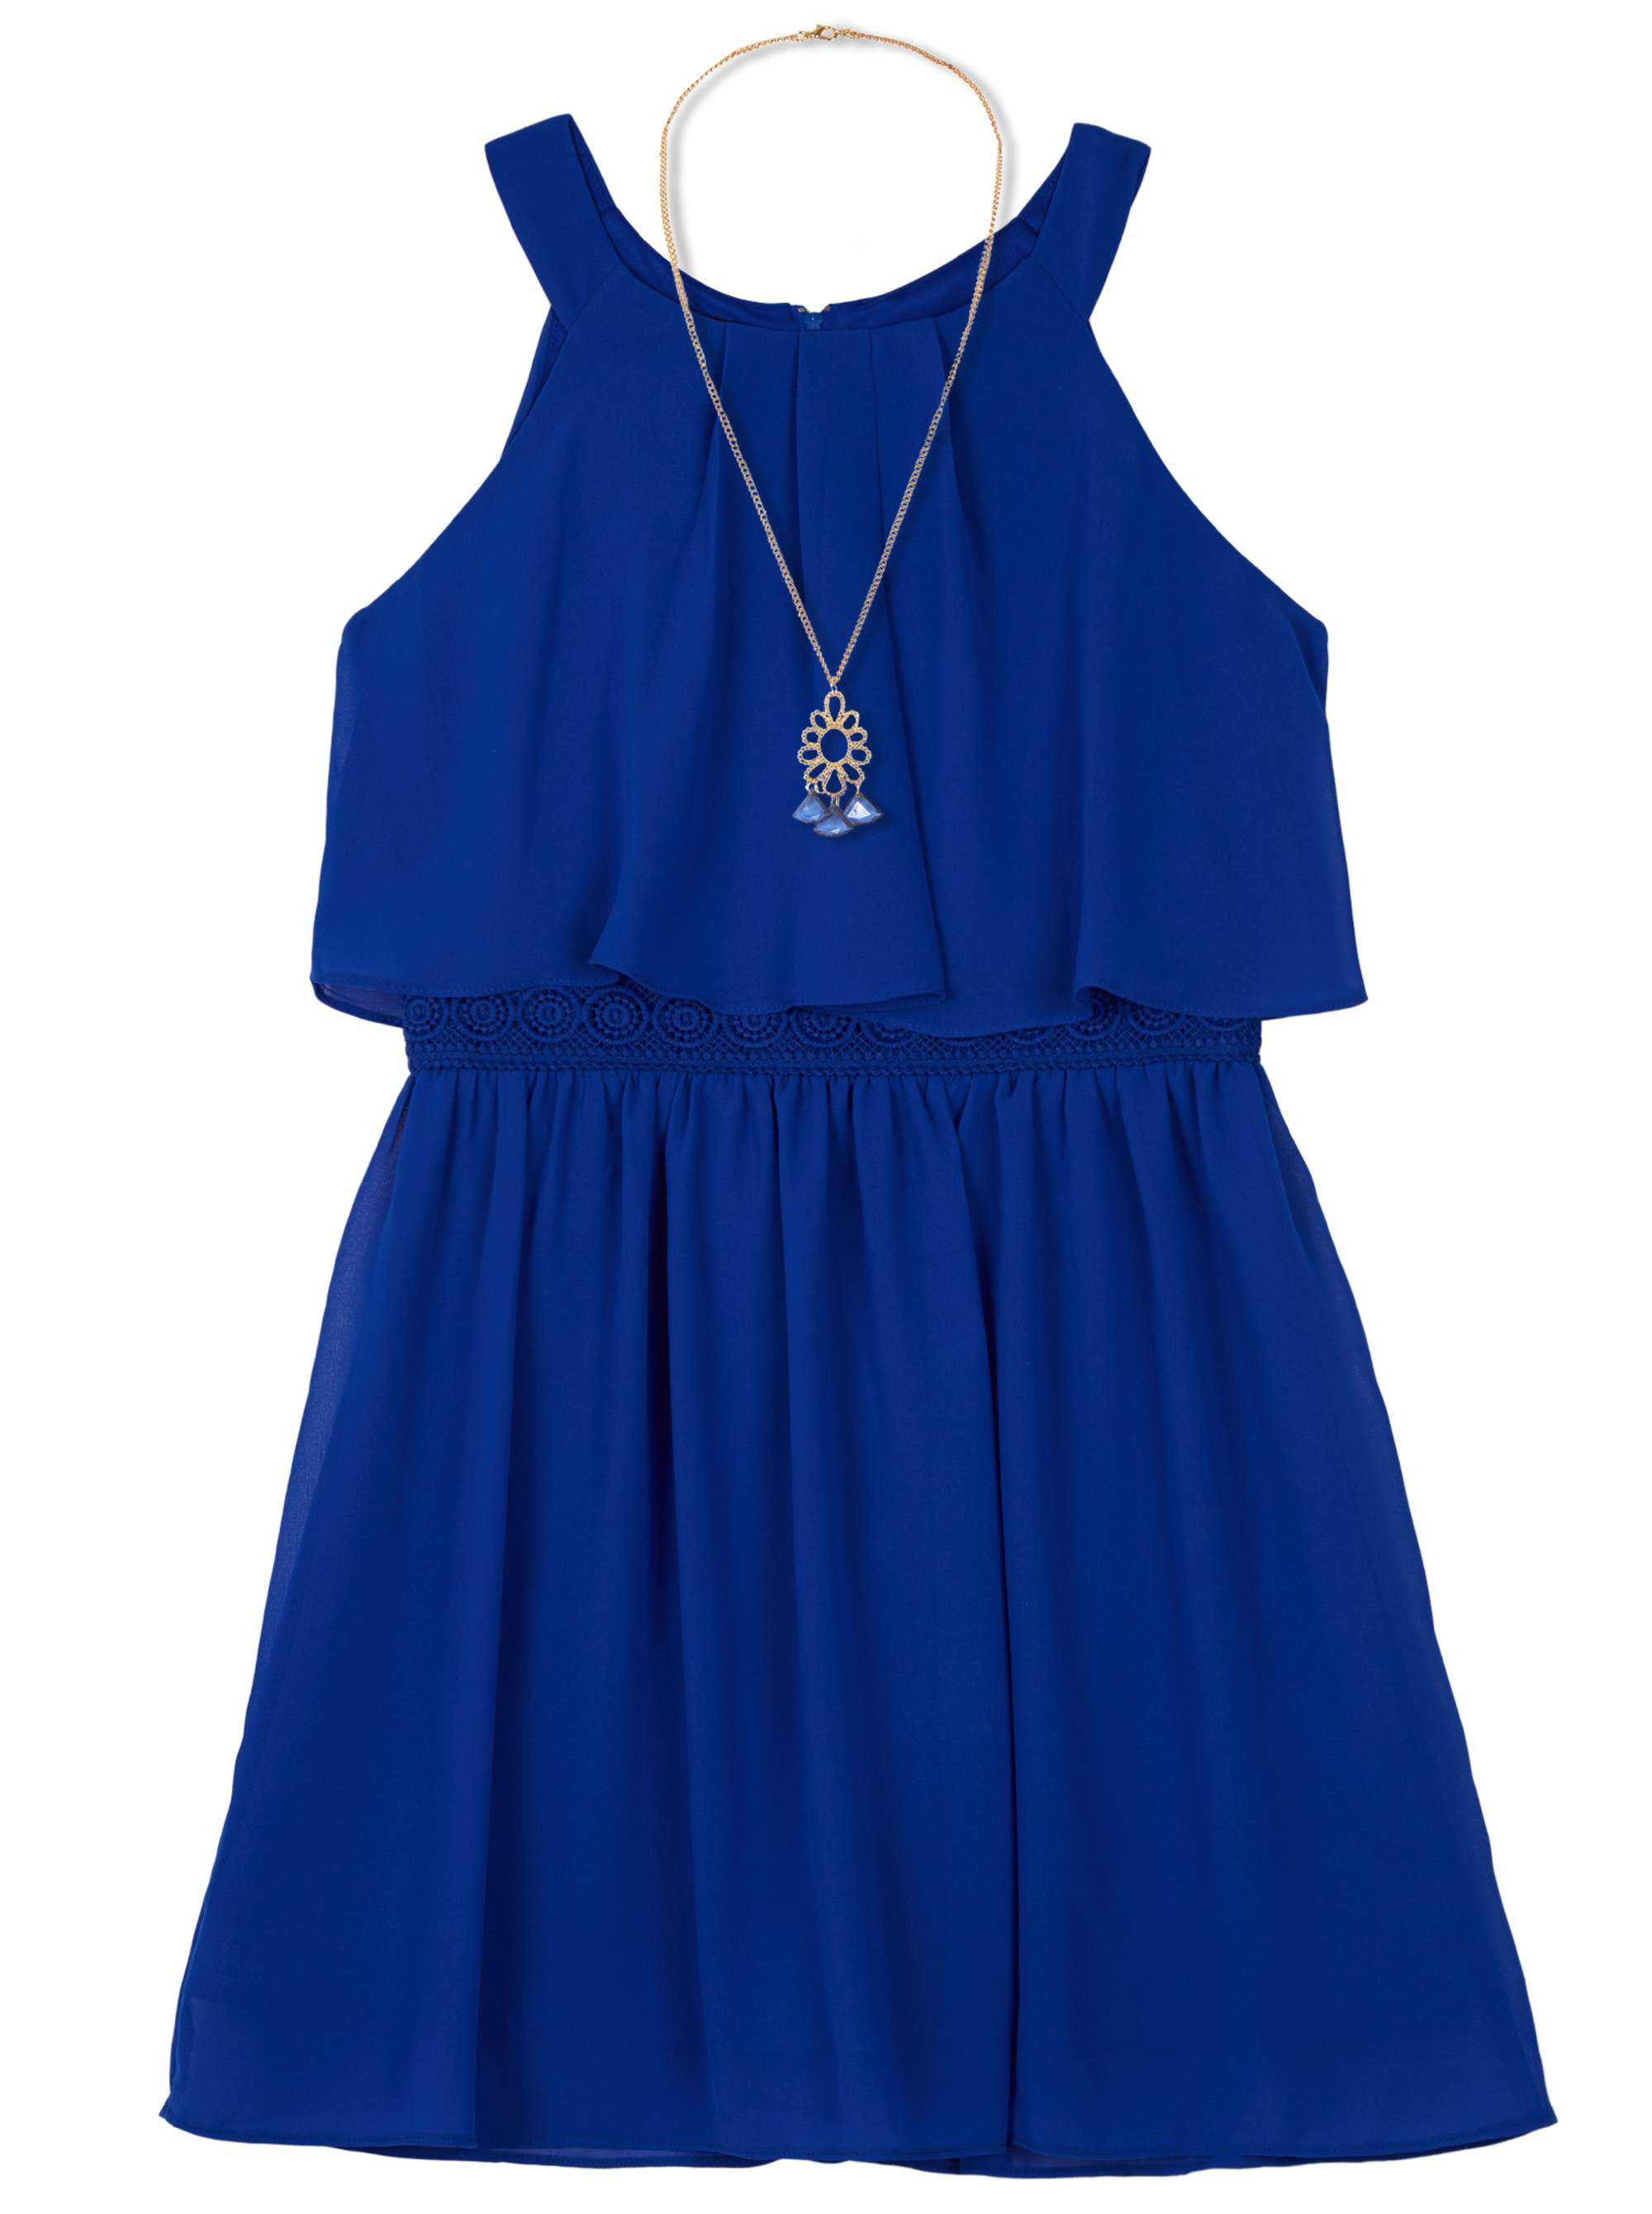 Popover Dress with Necklace (Big Girls) - Walmart.com